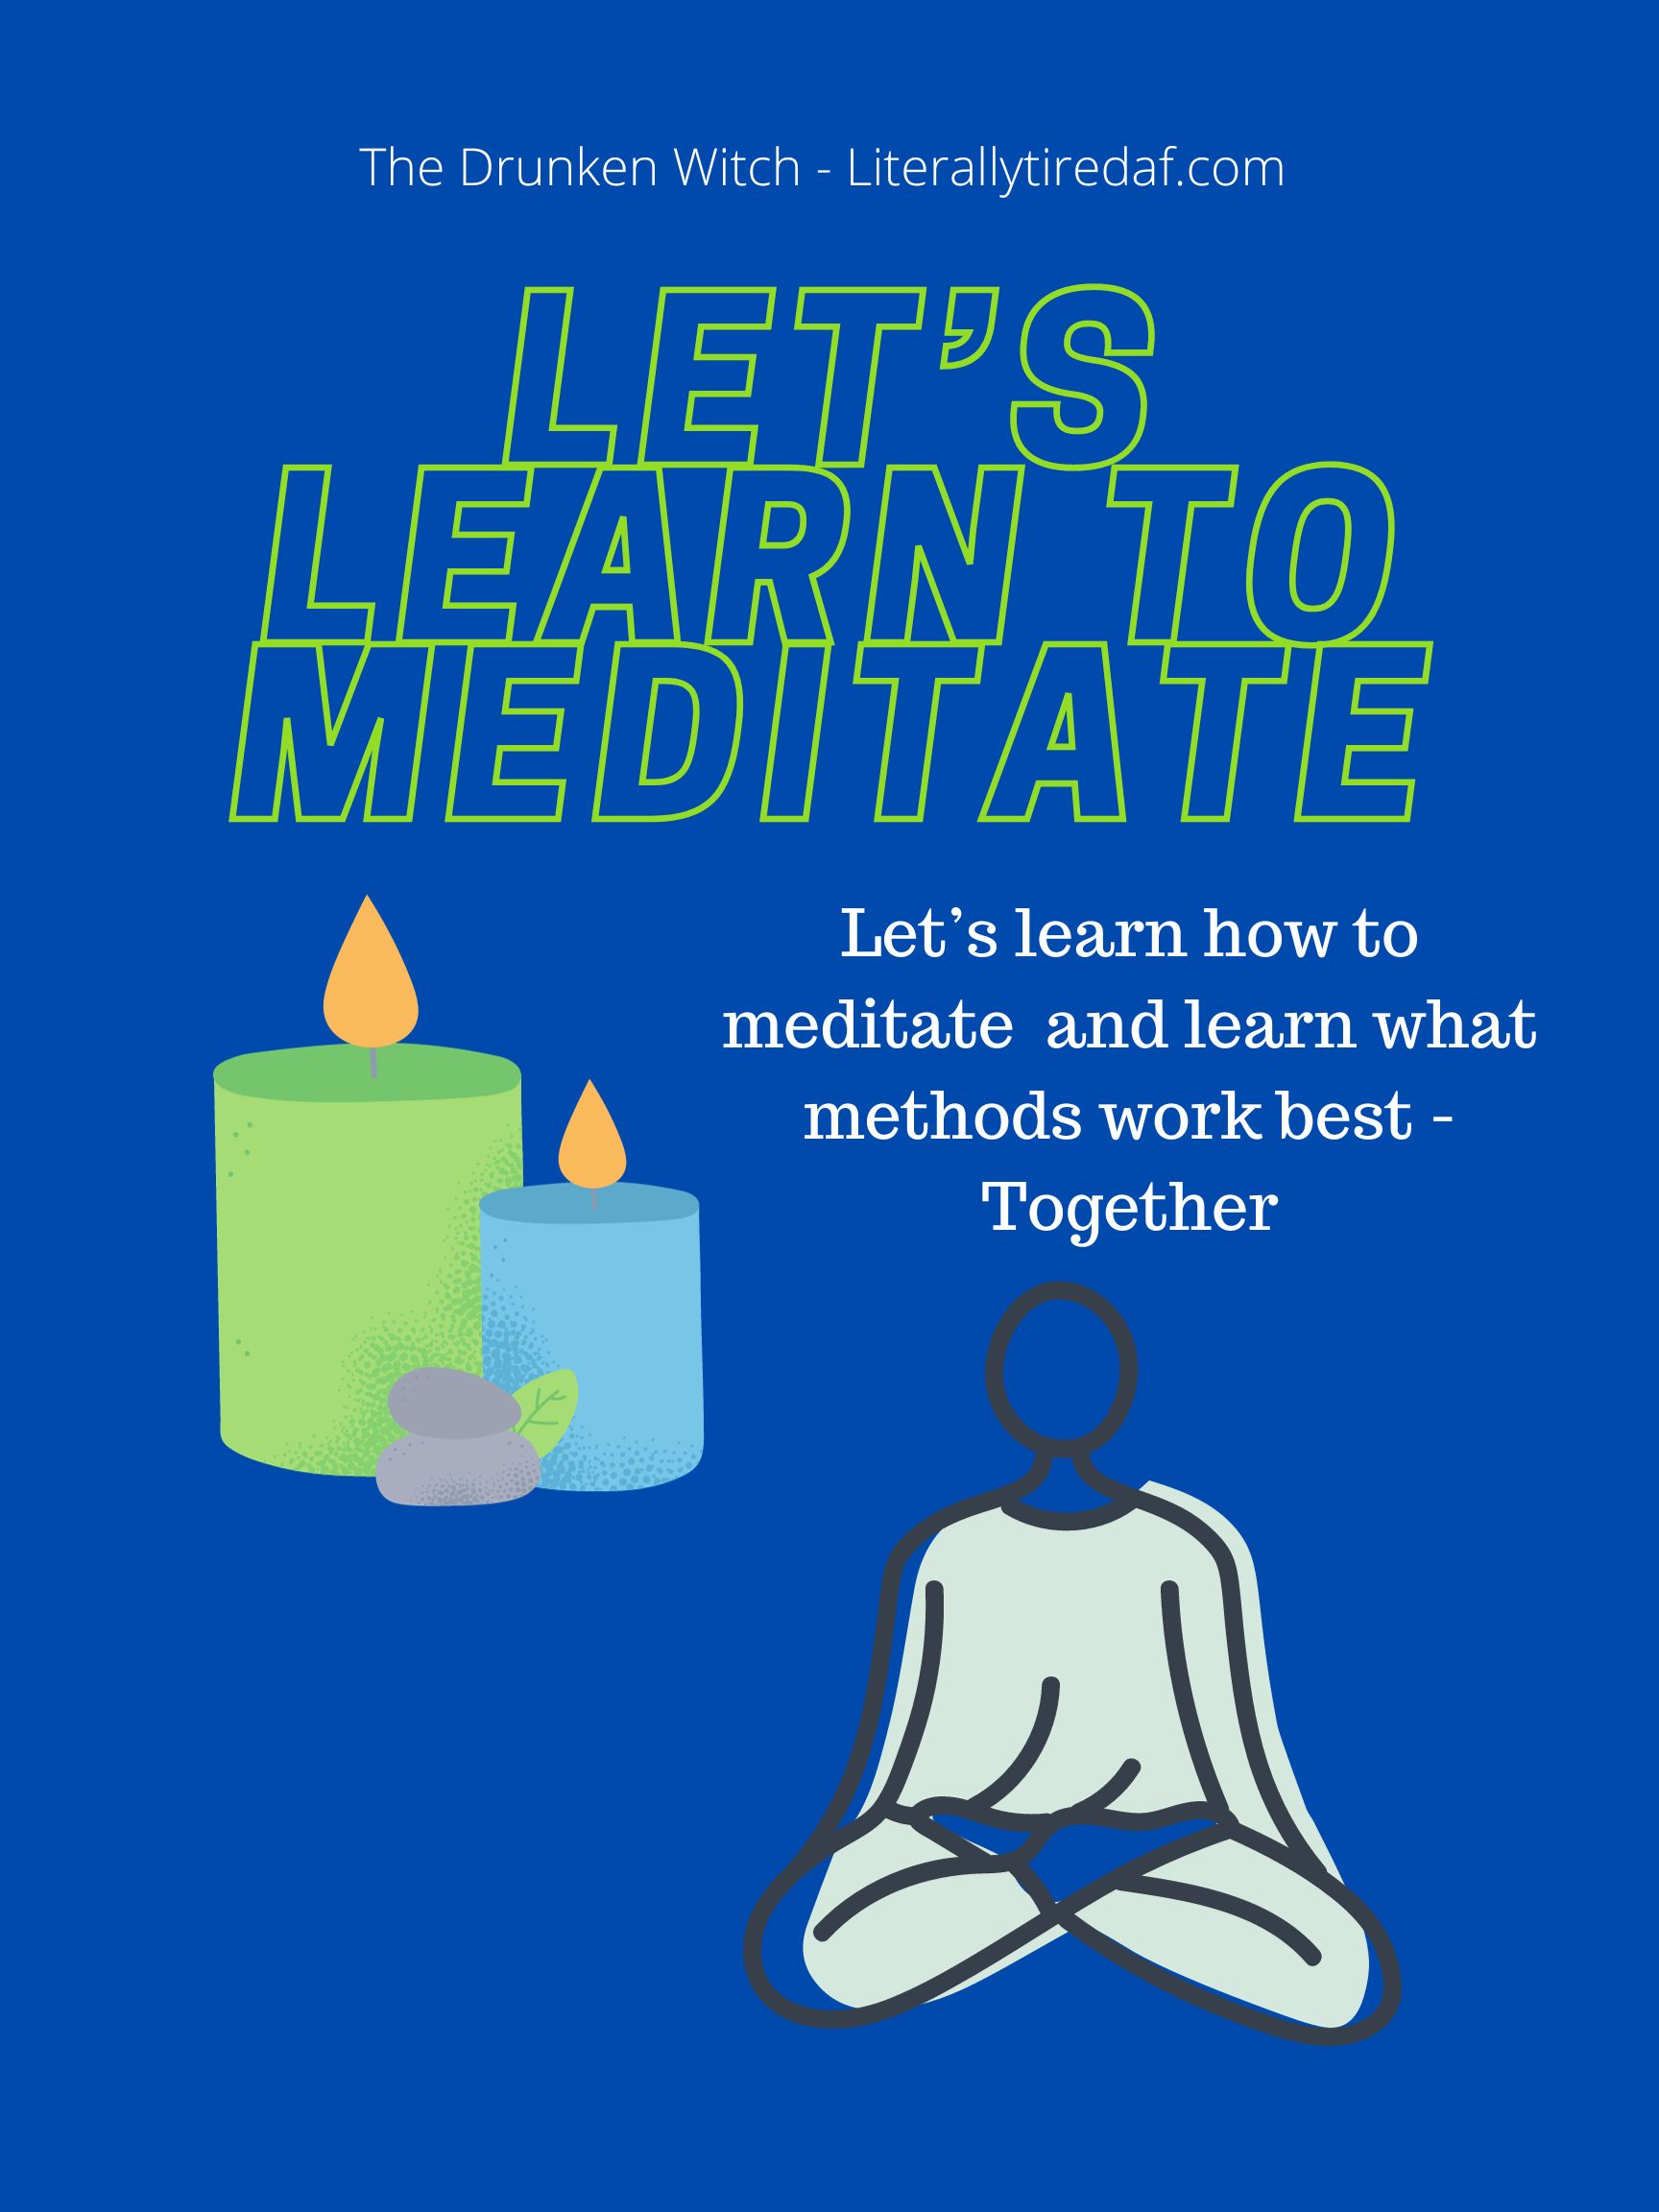 Chronicles on Meditating: Intro to Meditation